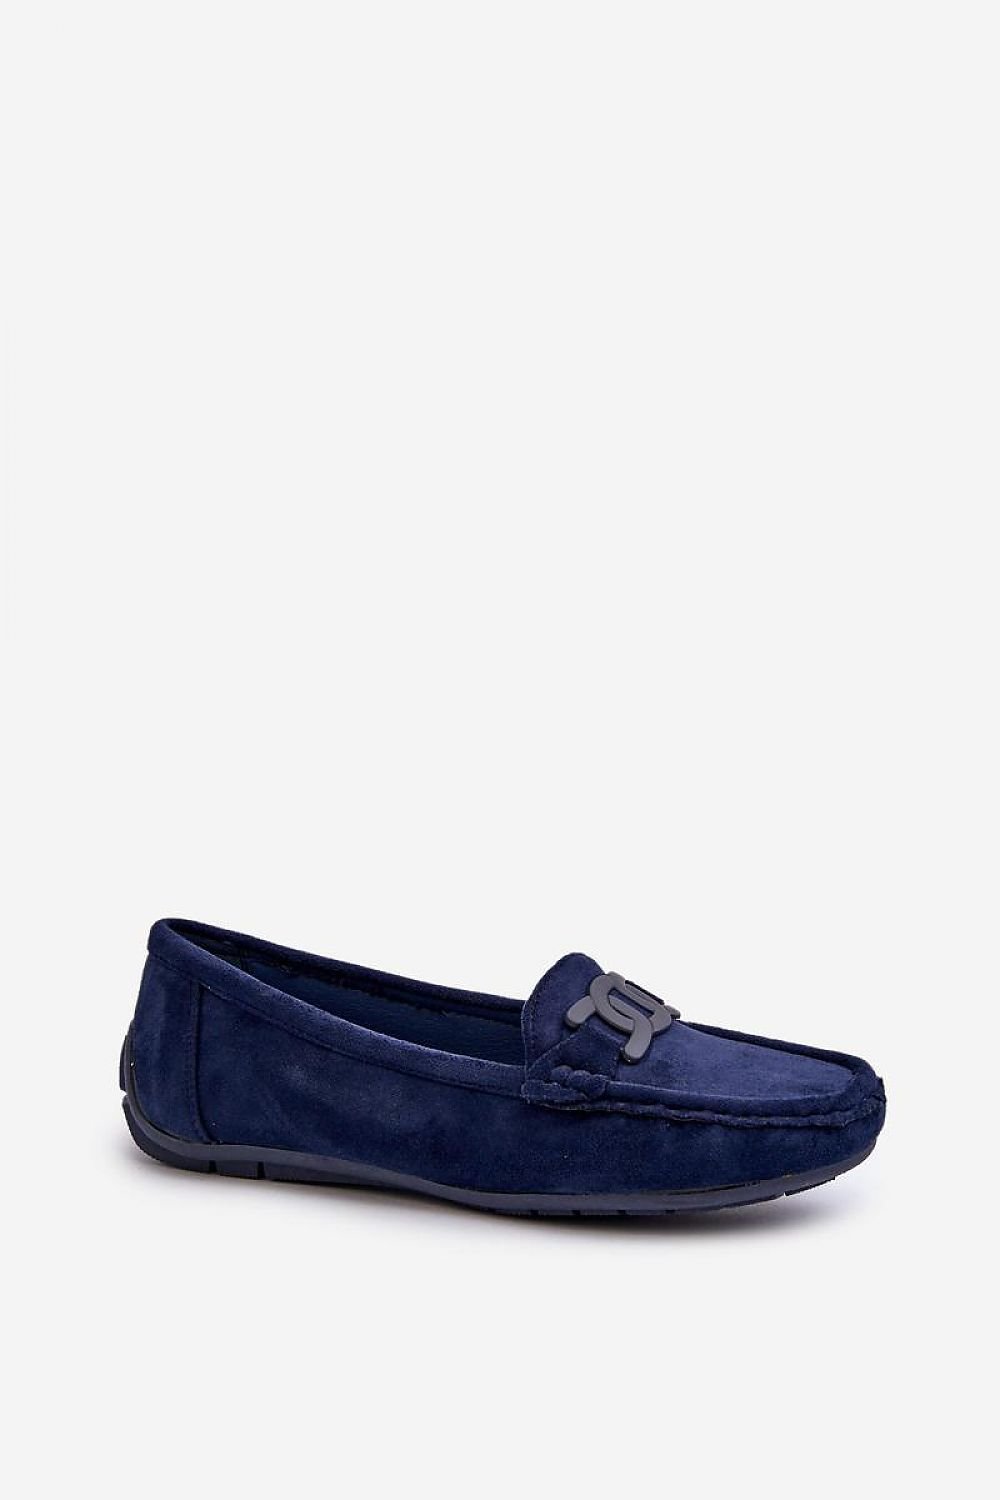 TEEK - Soft Link Top Mocassin Loafers SHOES TEEK MH navy blue 6.5 